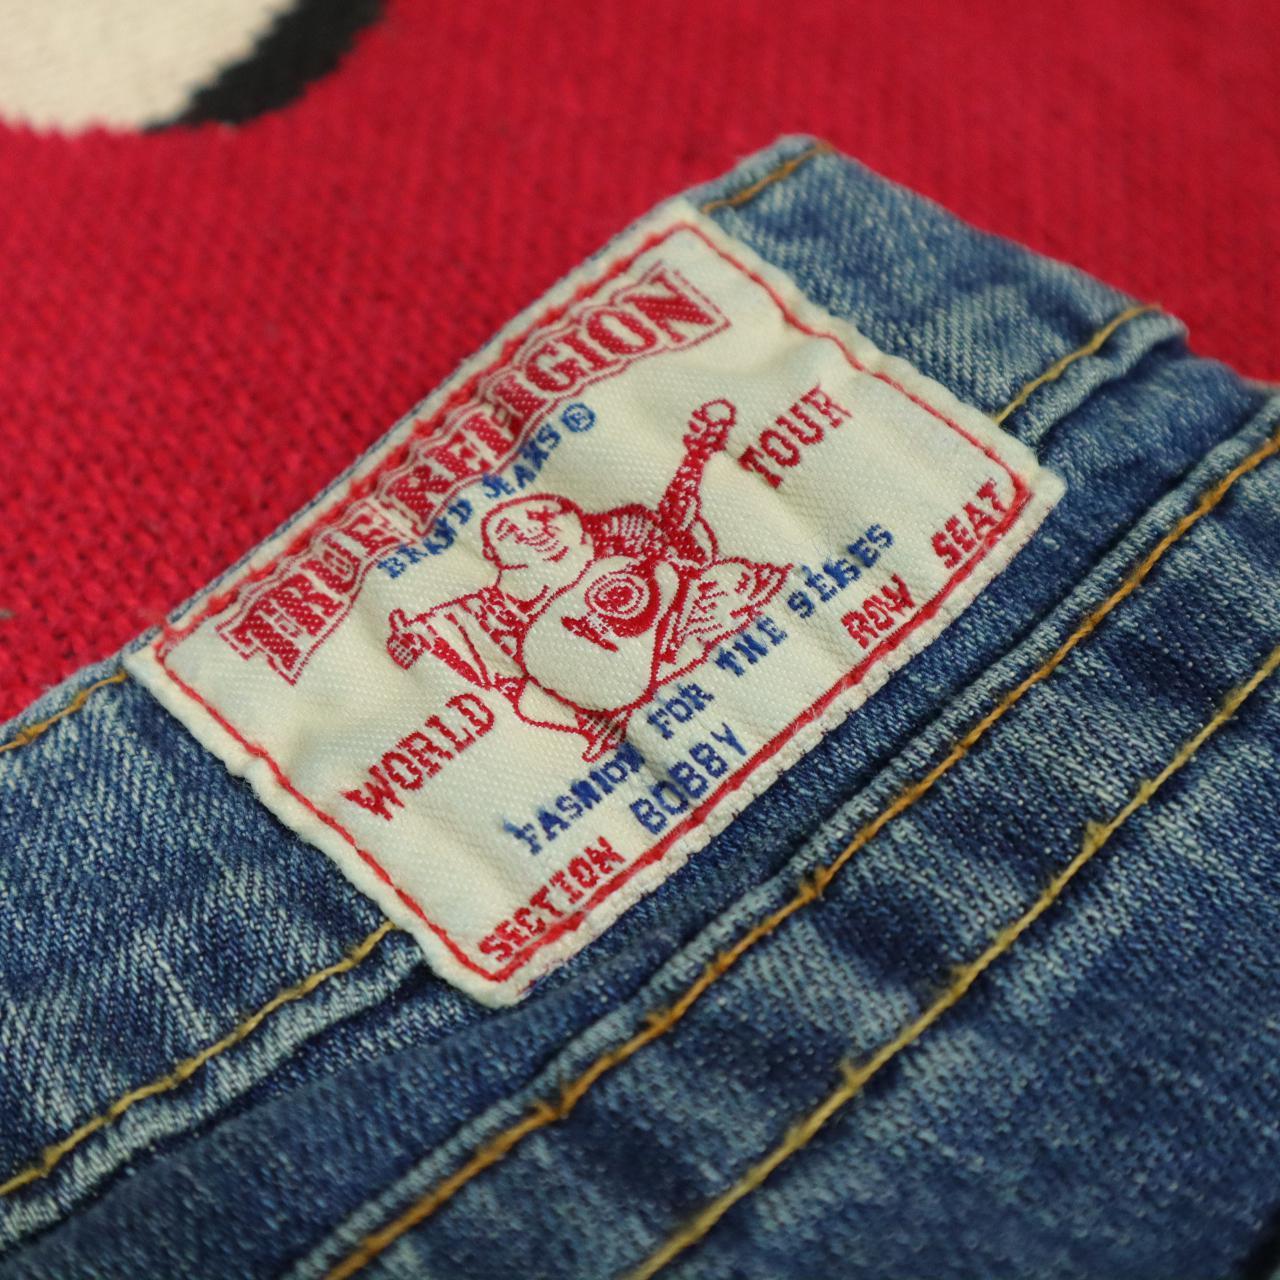 Product Image 3 - True Religion Jeans

Size 31x30

Waist: 31"
Length: